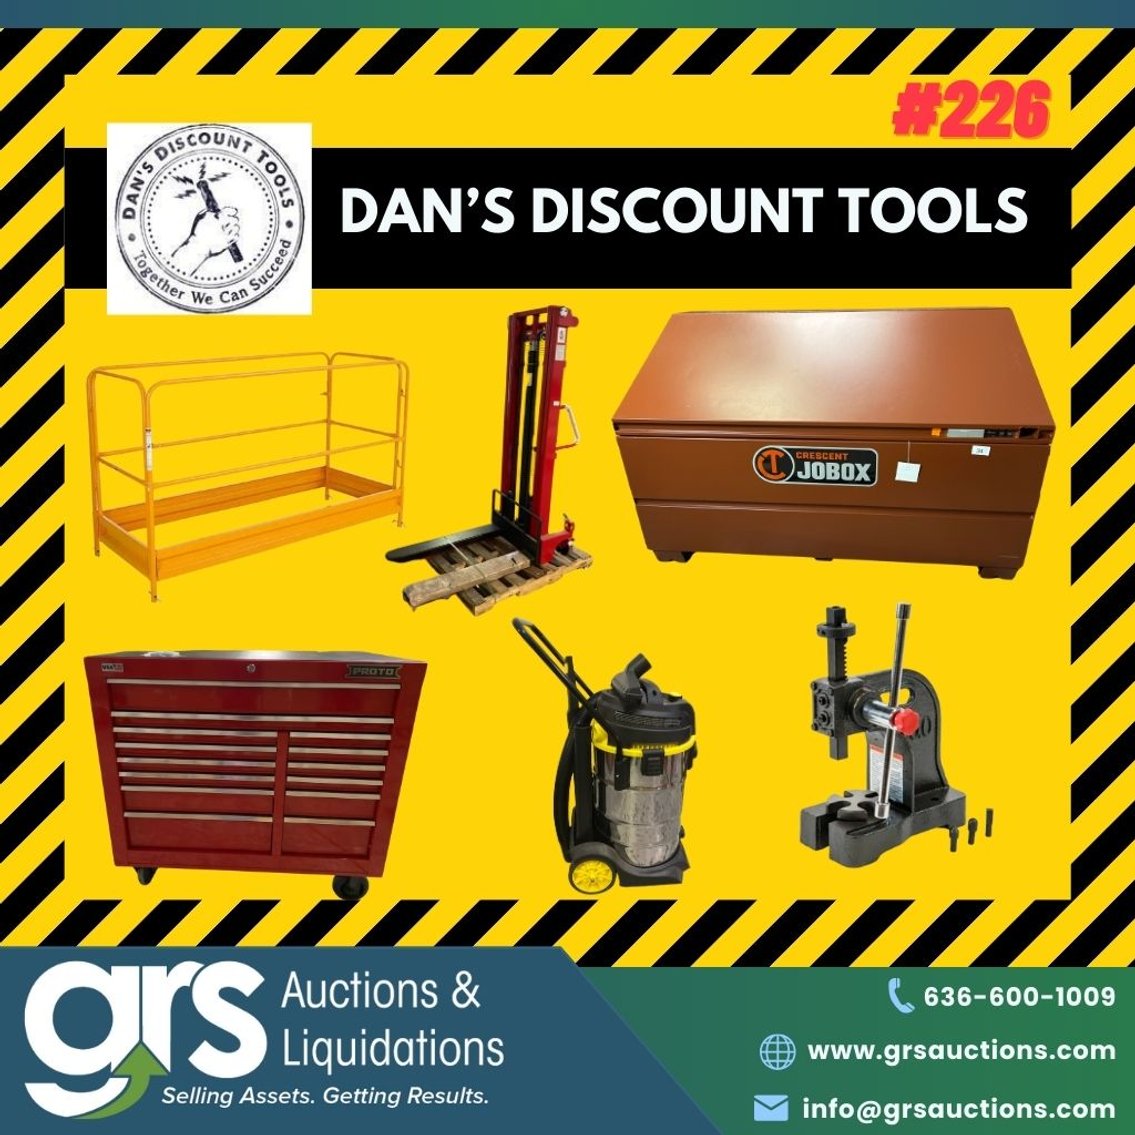 Dan's Discount Tools #226